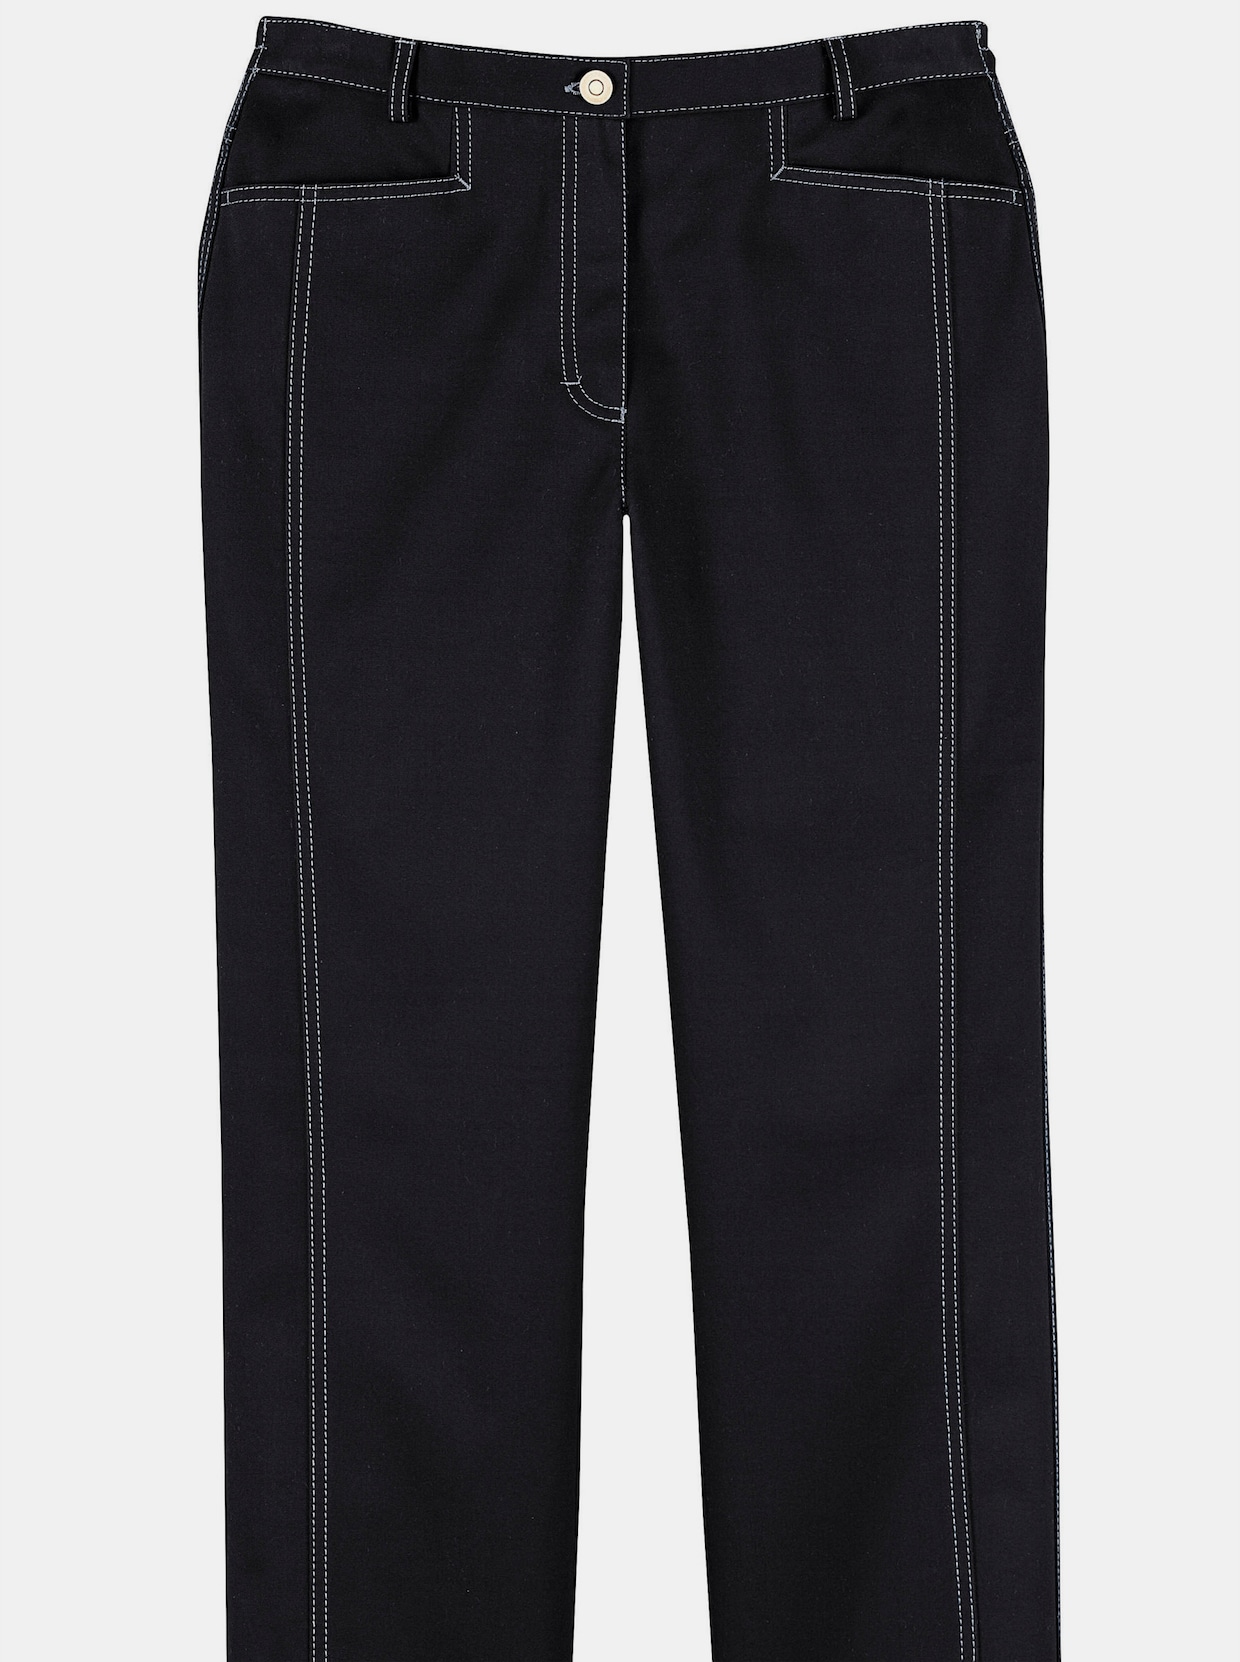 Cosma Pantalon thermique - noir